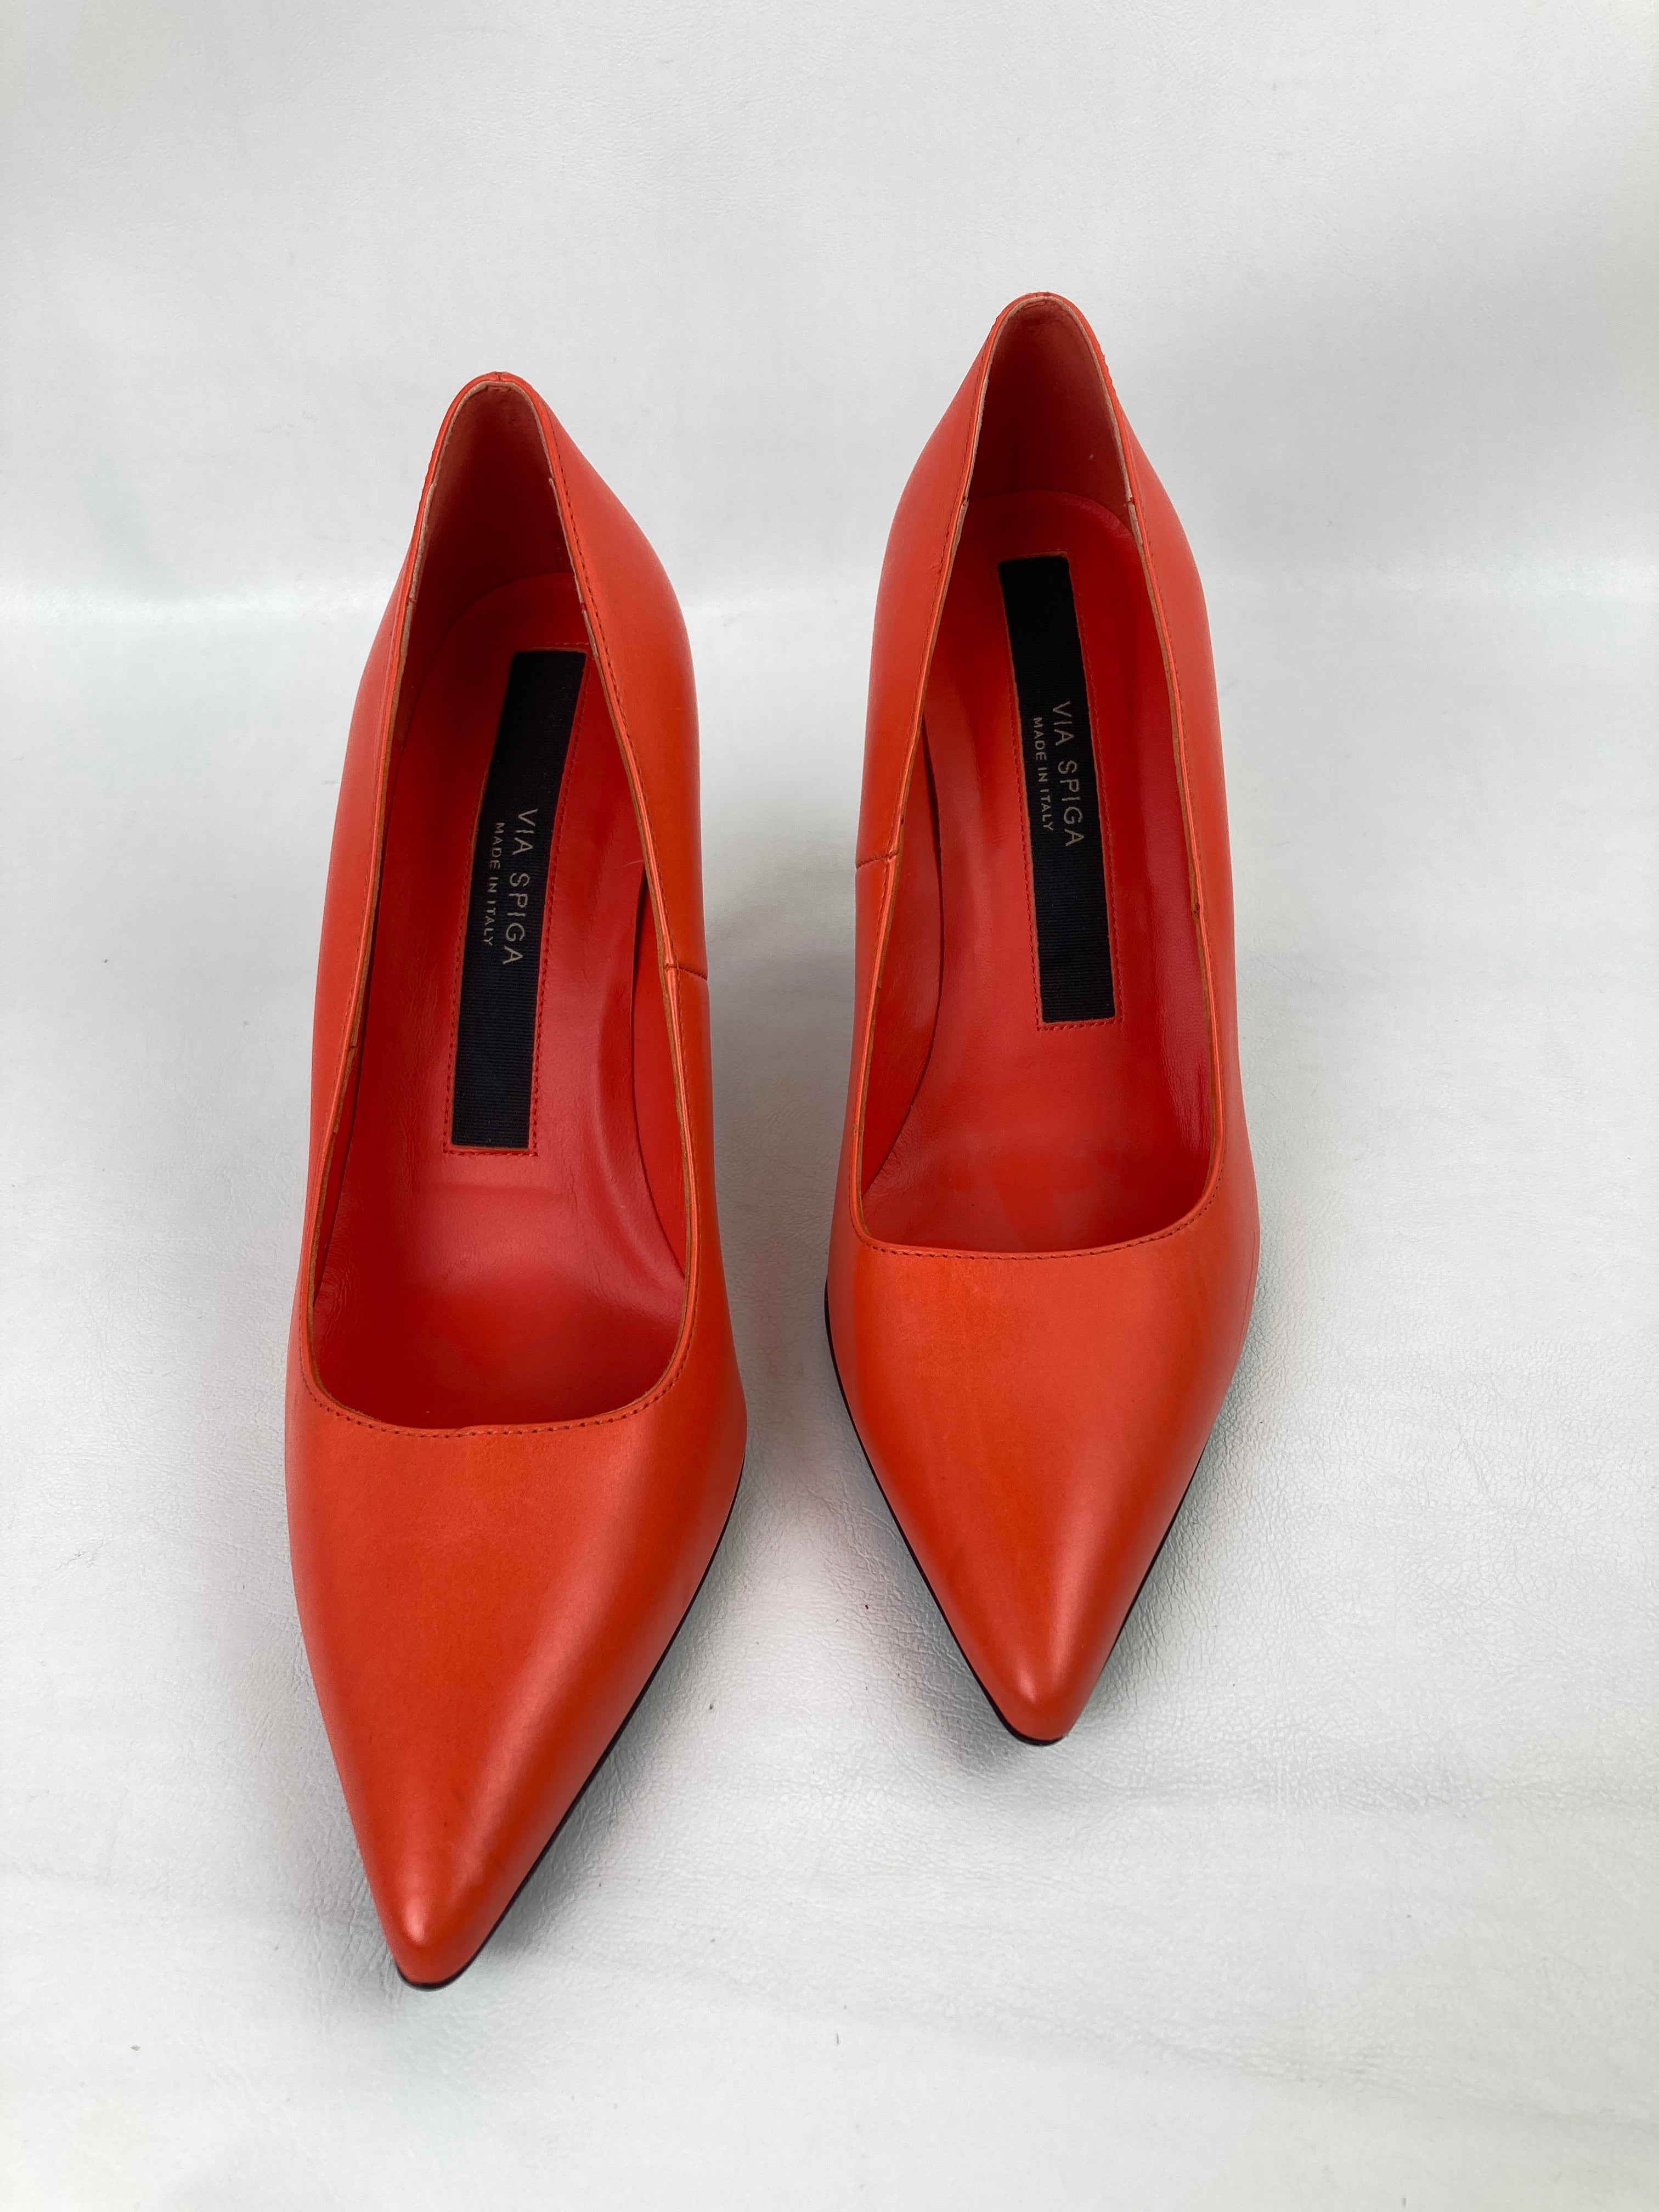 VIA SPIGA Black Patent Leather Strap Heels (US 6.5 EU 36.5) item #40770